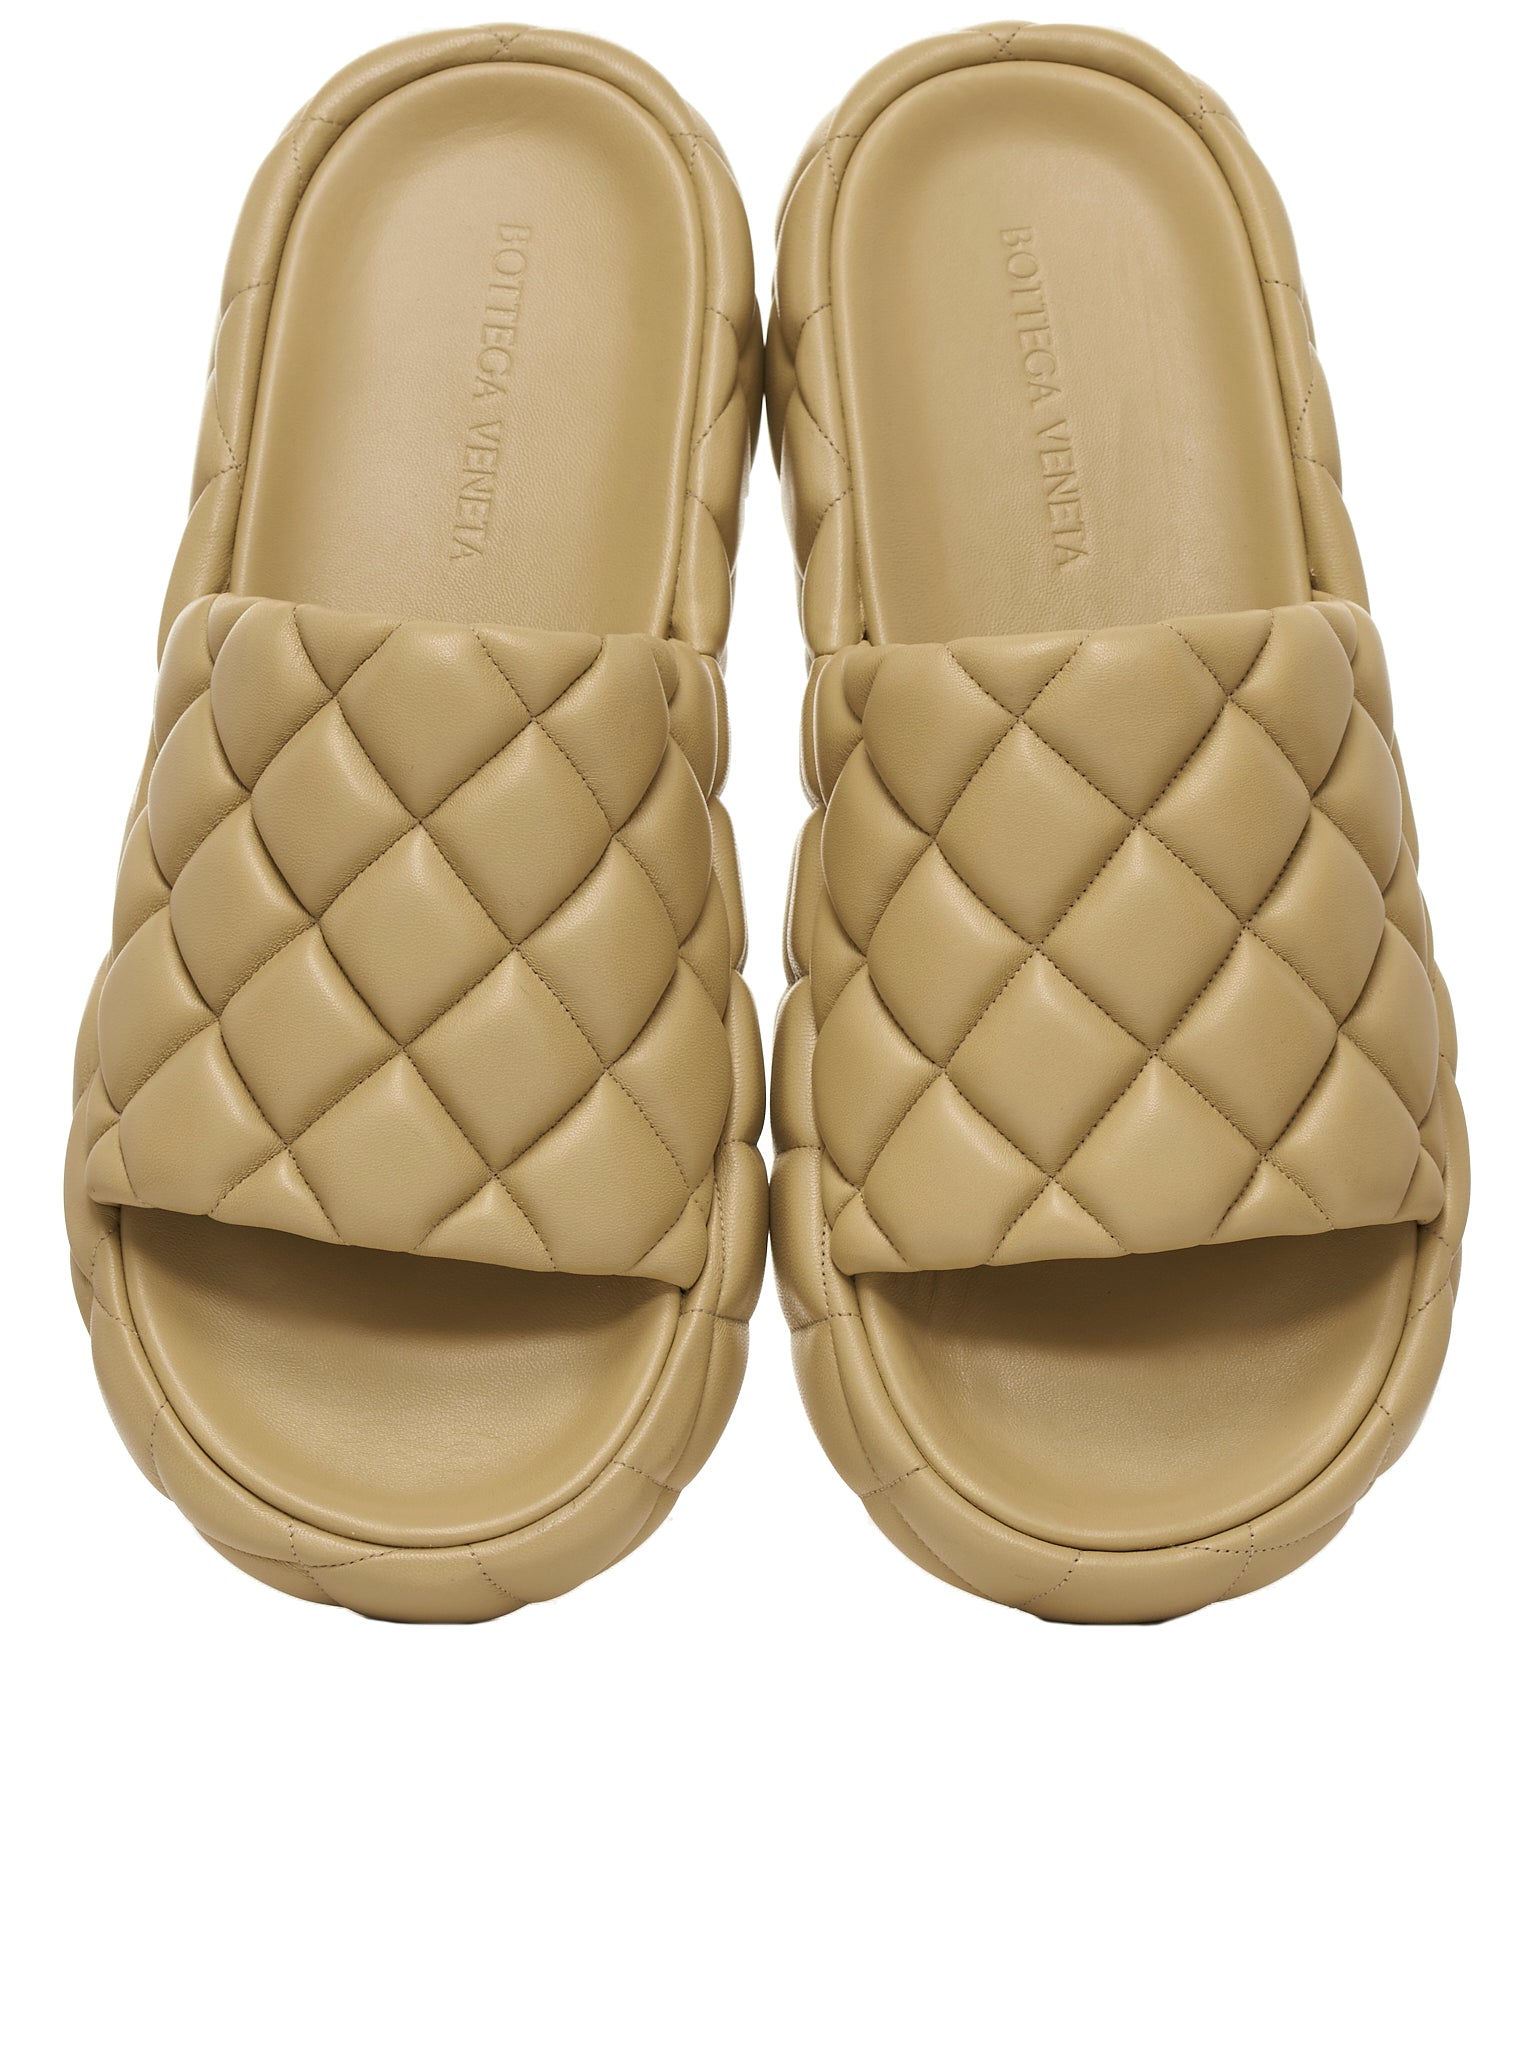 Bottega Veneta Padded Sandals | H. Lorenzo - top